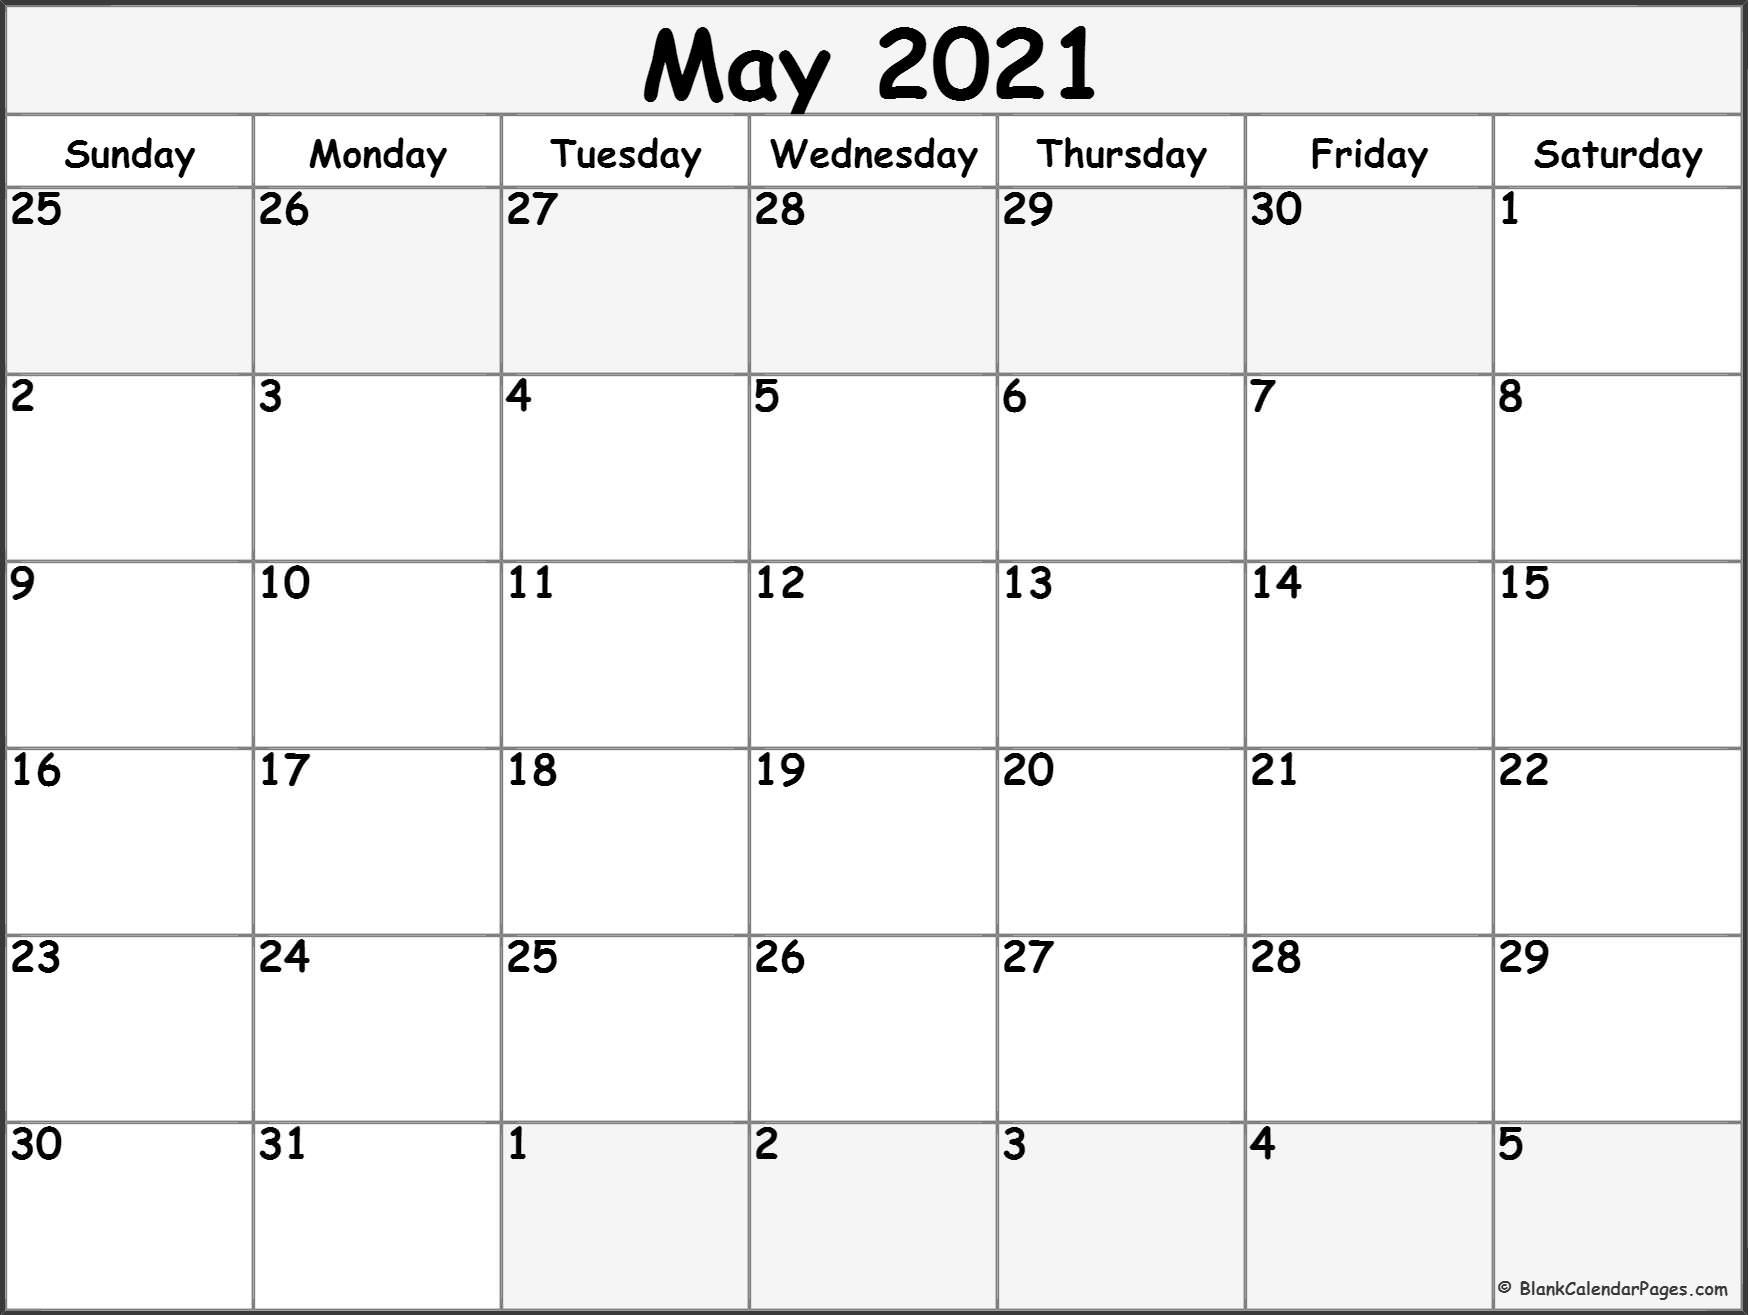 May 2021 Calendar | Free Printable Monthly Calendars